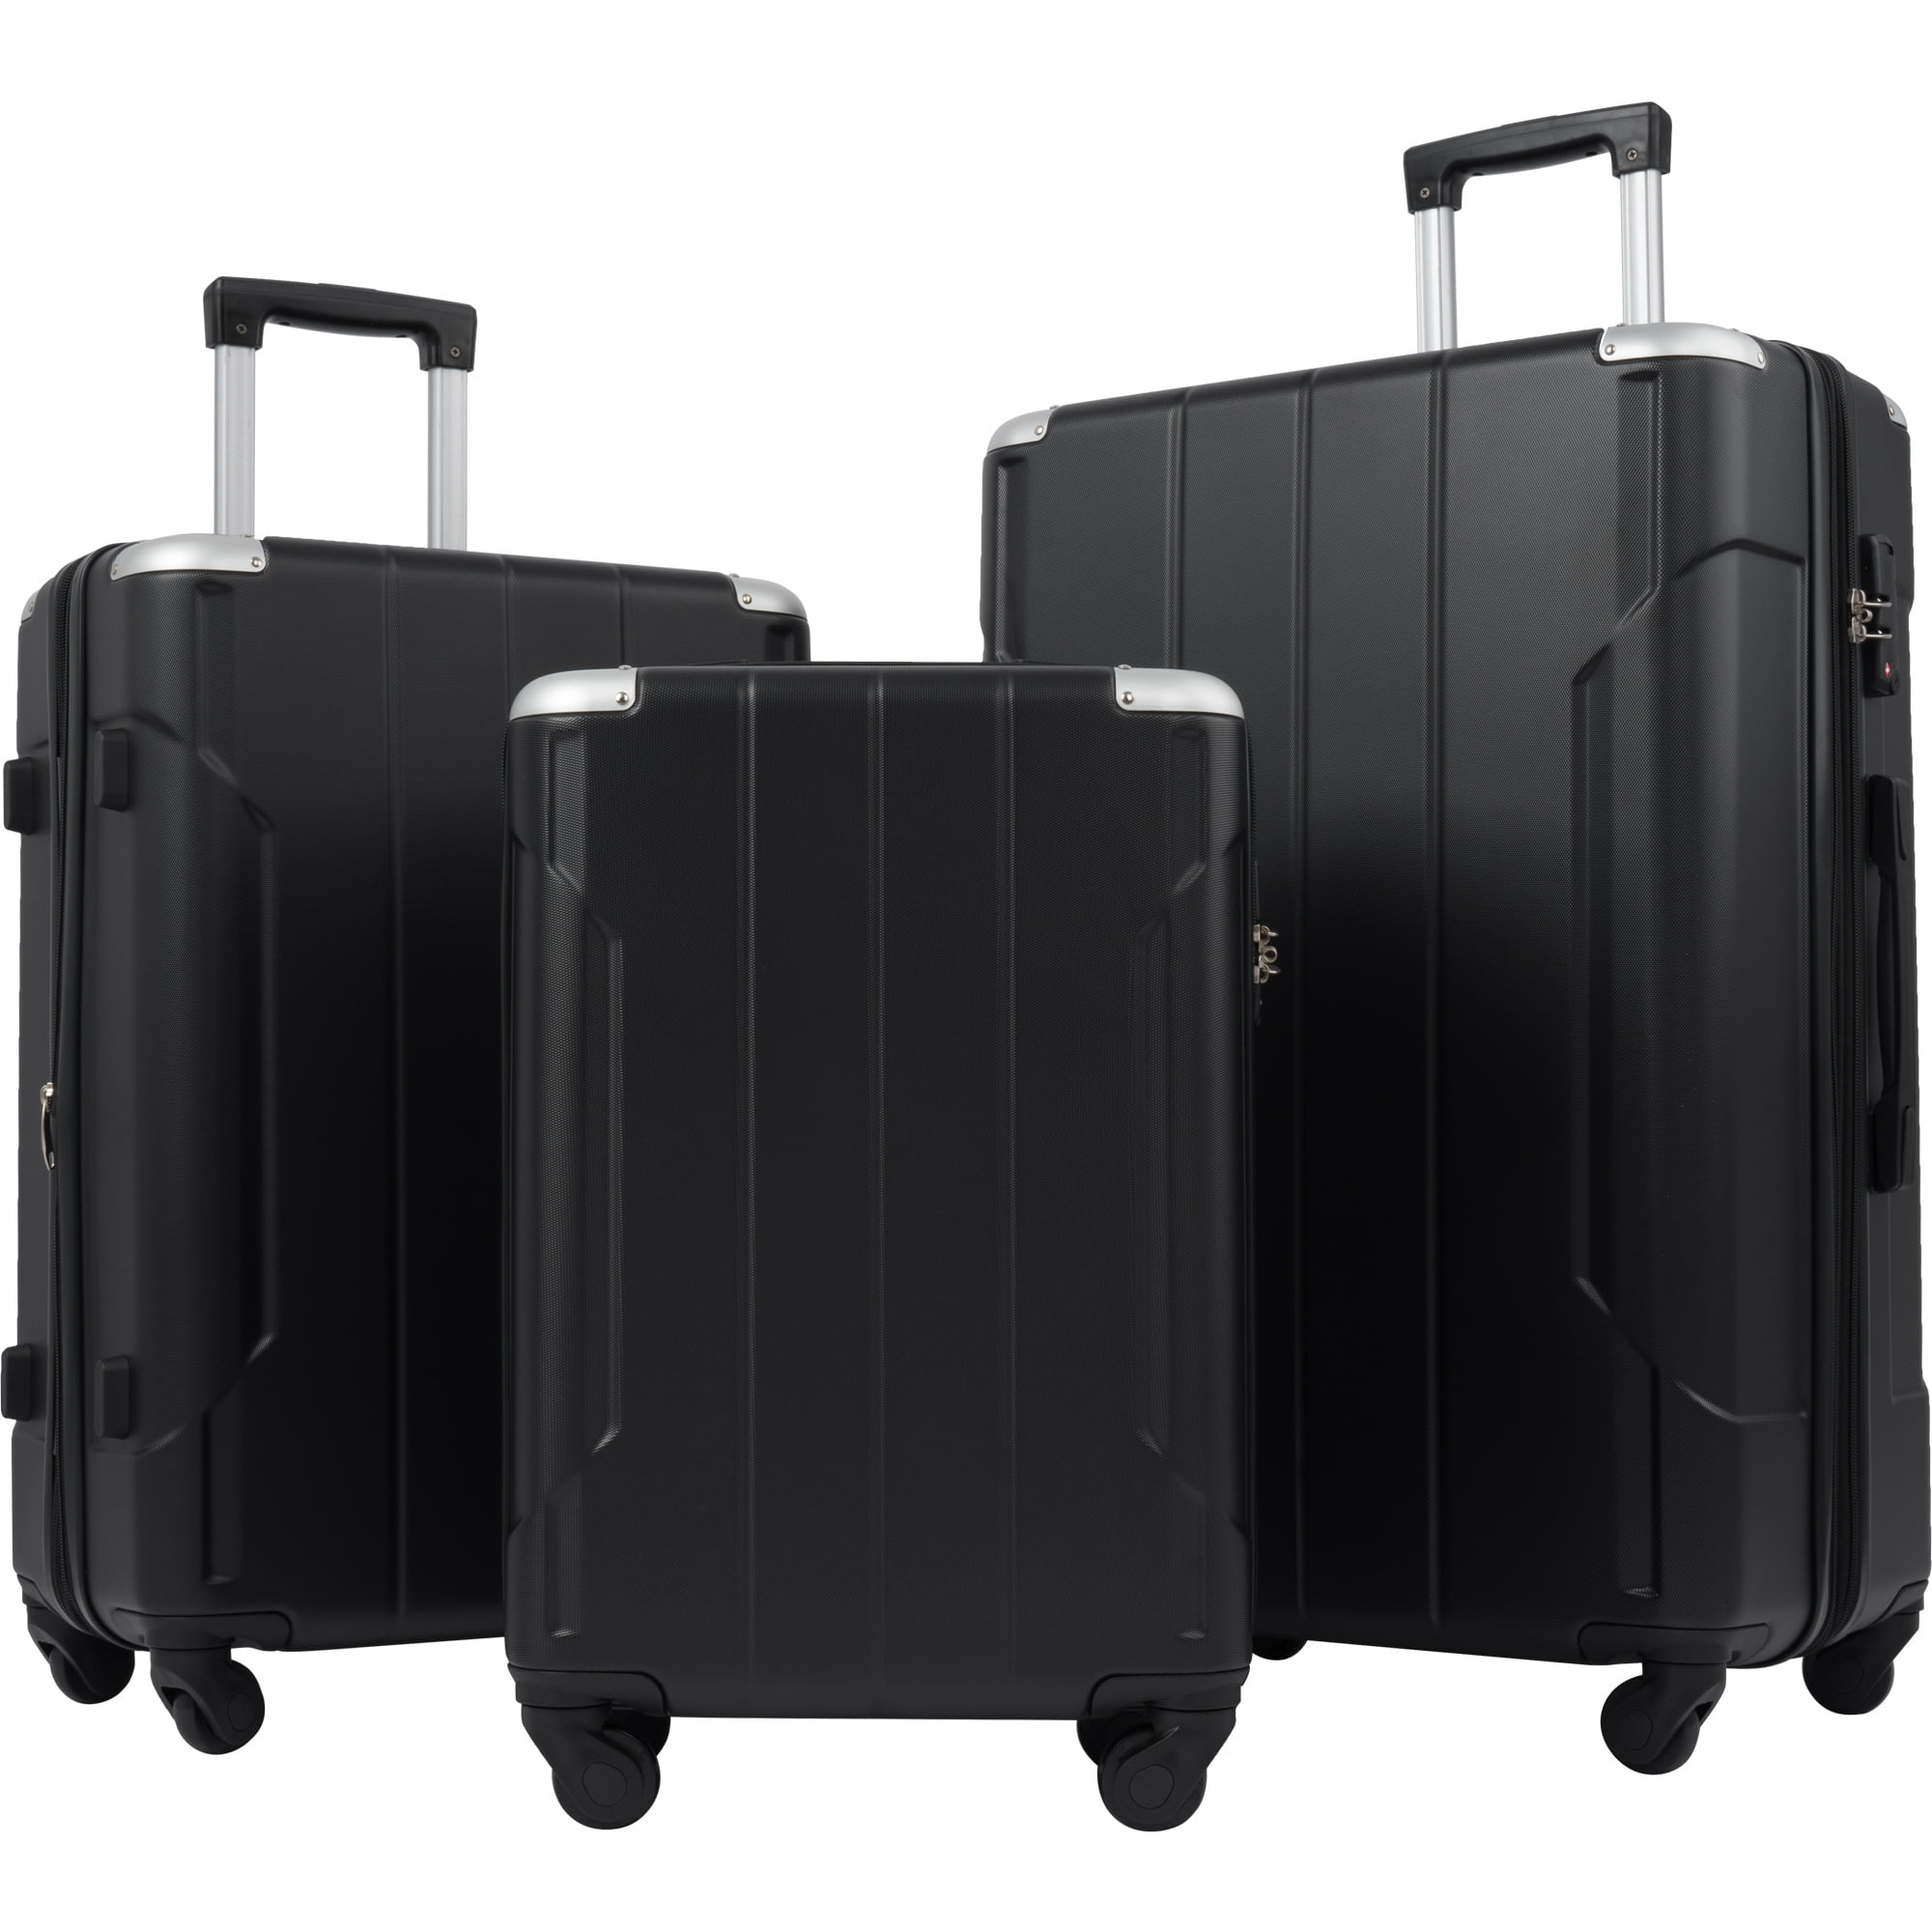 Anysun 3 Piece Luggage Set with TSA Lock Zipper Suitcase - Black ...